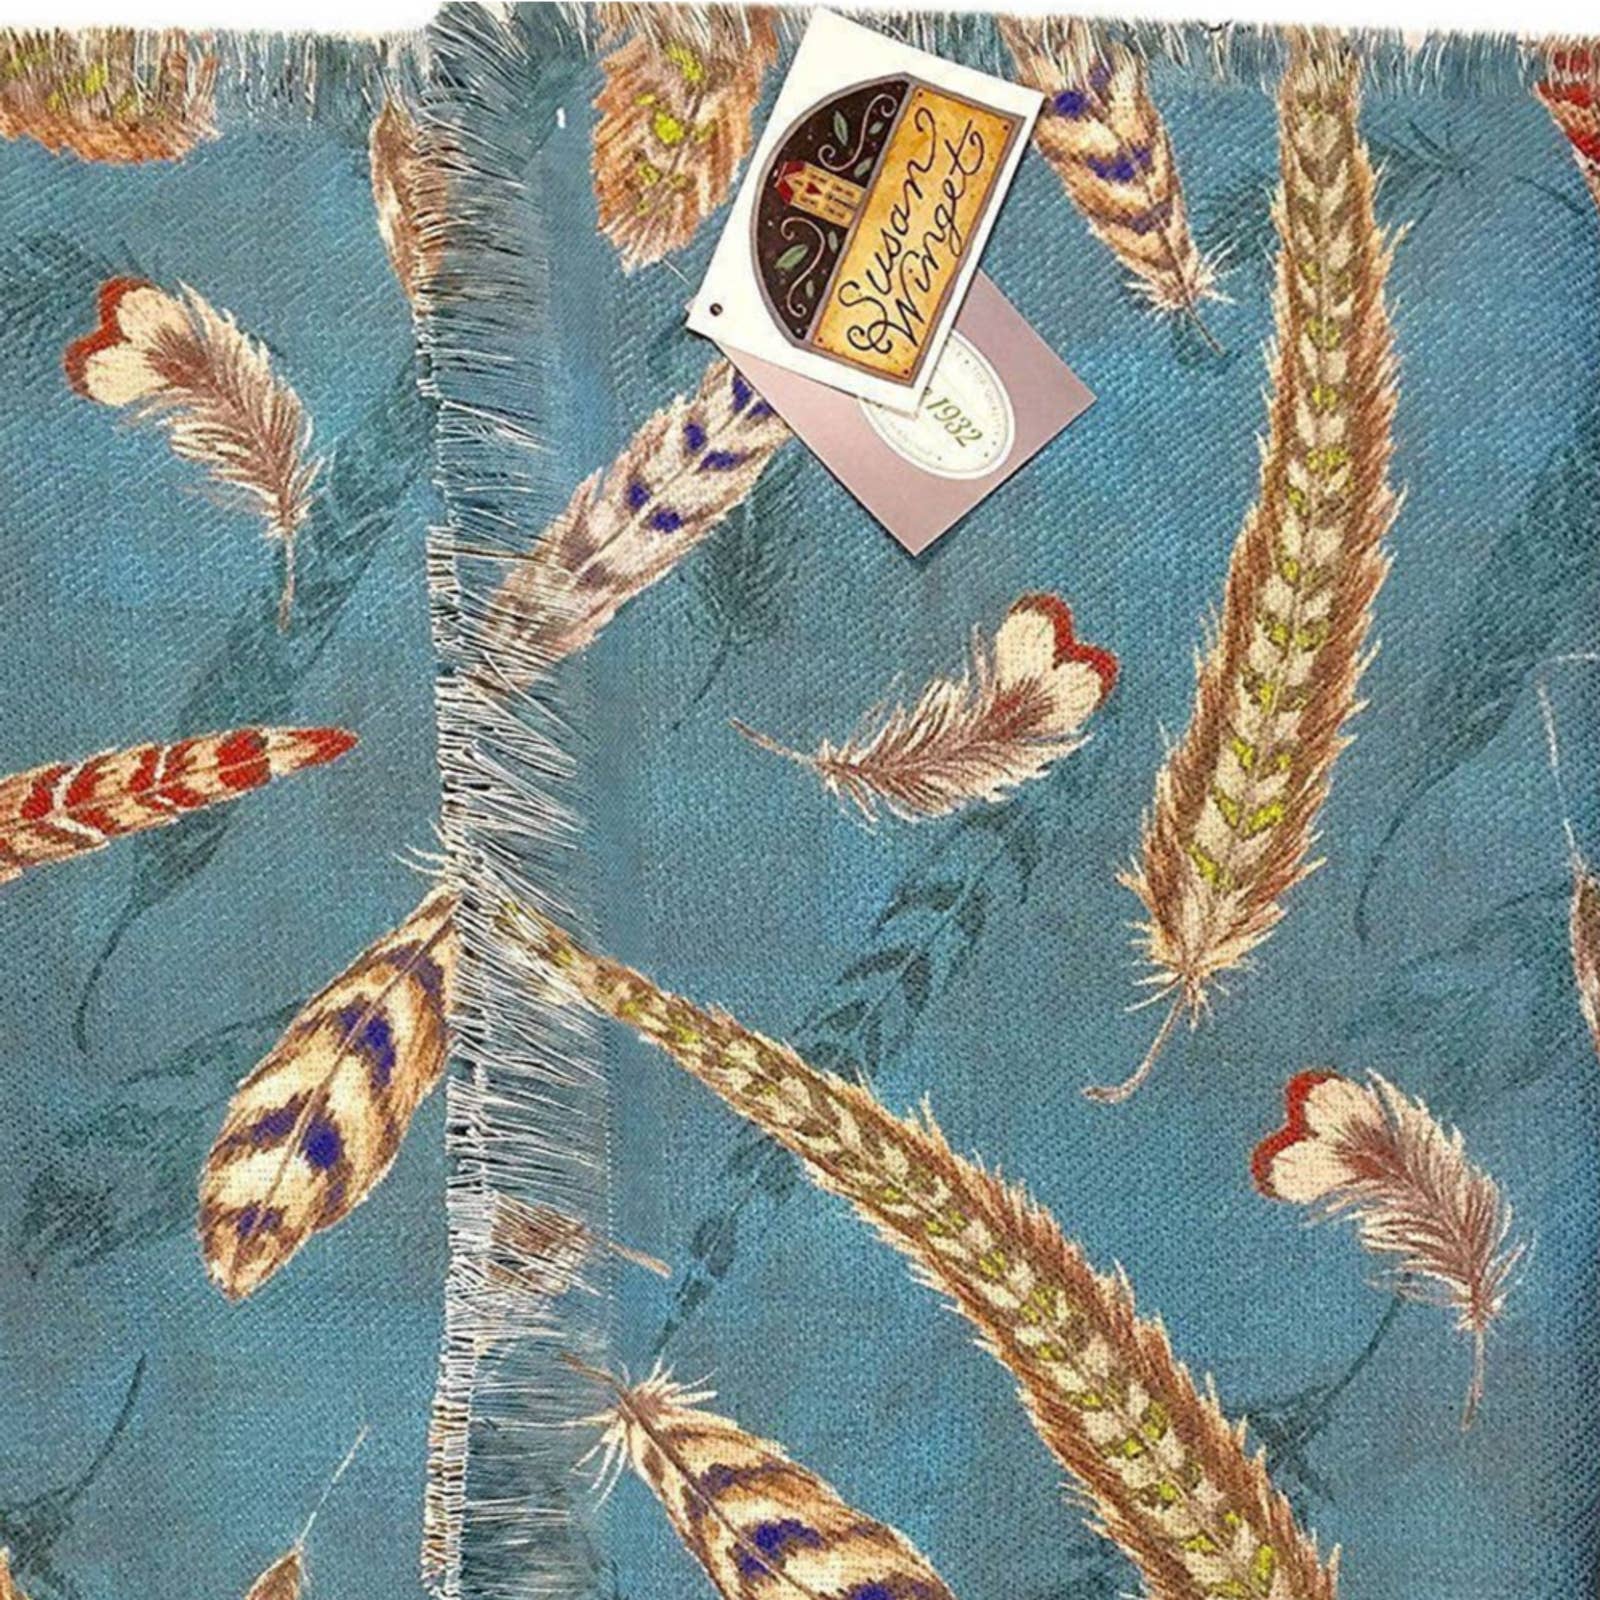 Susan Winget Pheasant Feathers Decorative Throw Blanket Print Blue 50x60" NEW